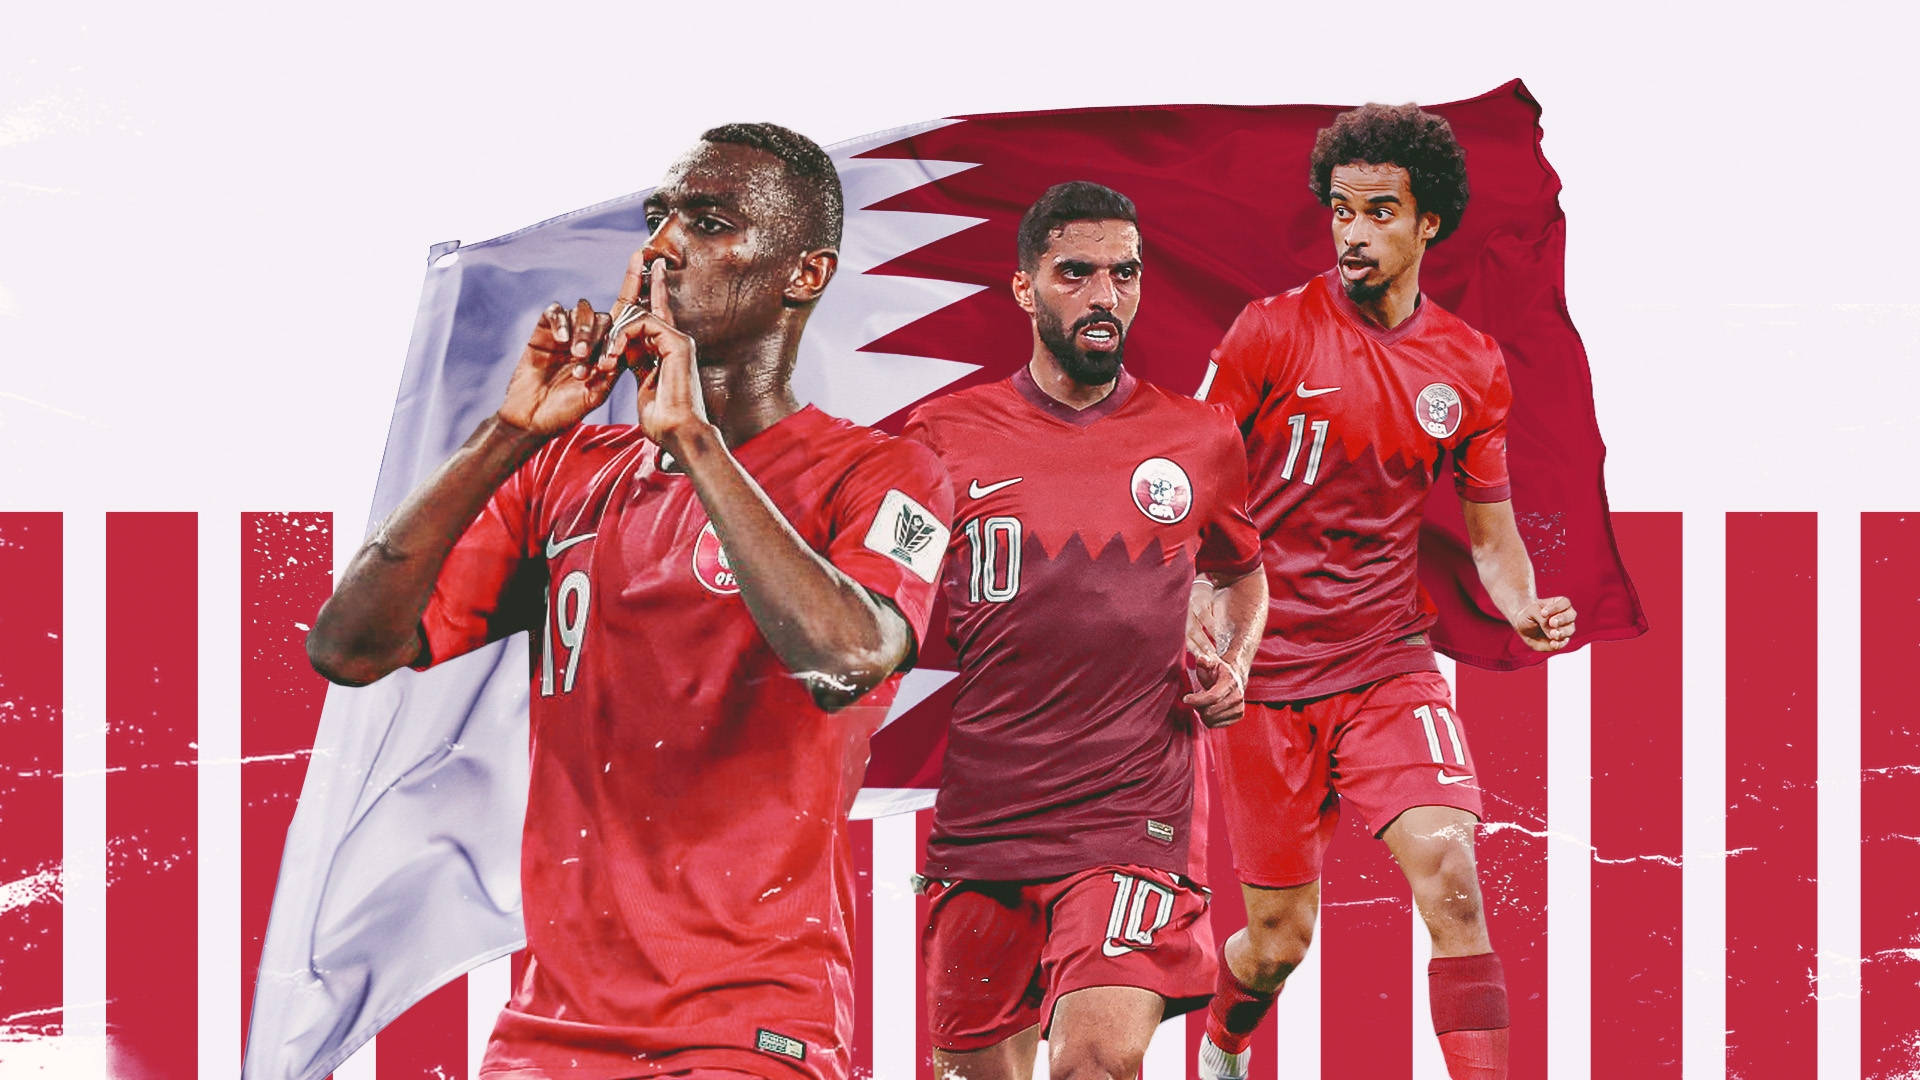 Qatar National Football Team With Qatar Flag Background